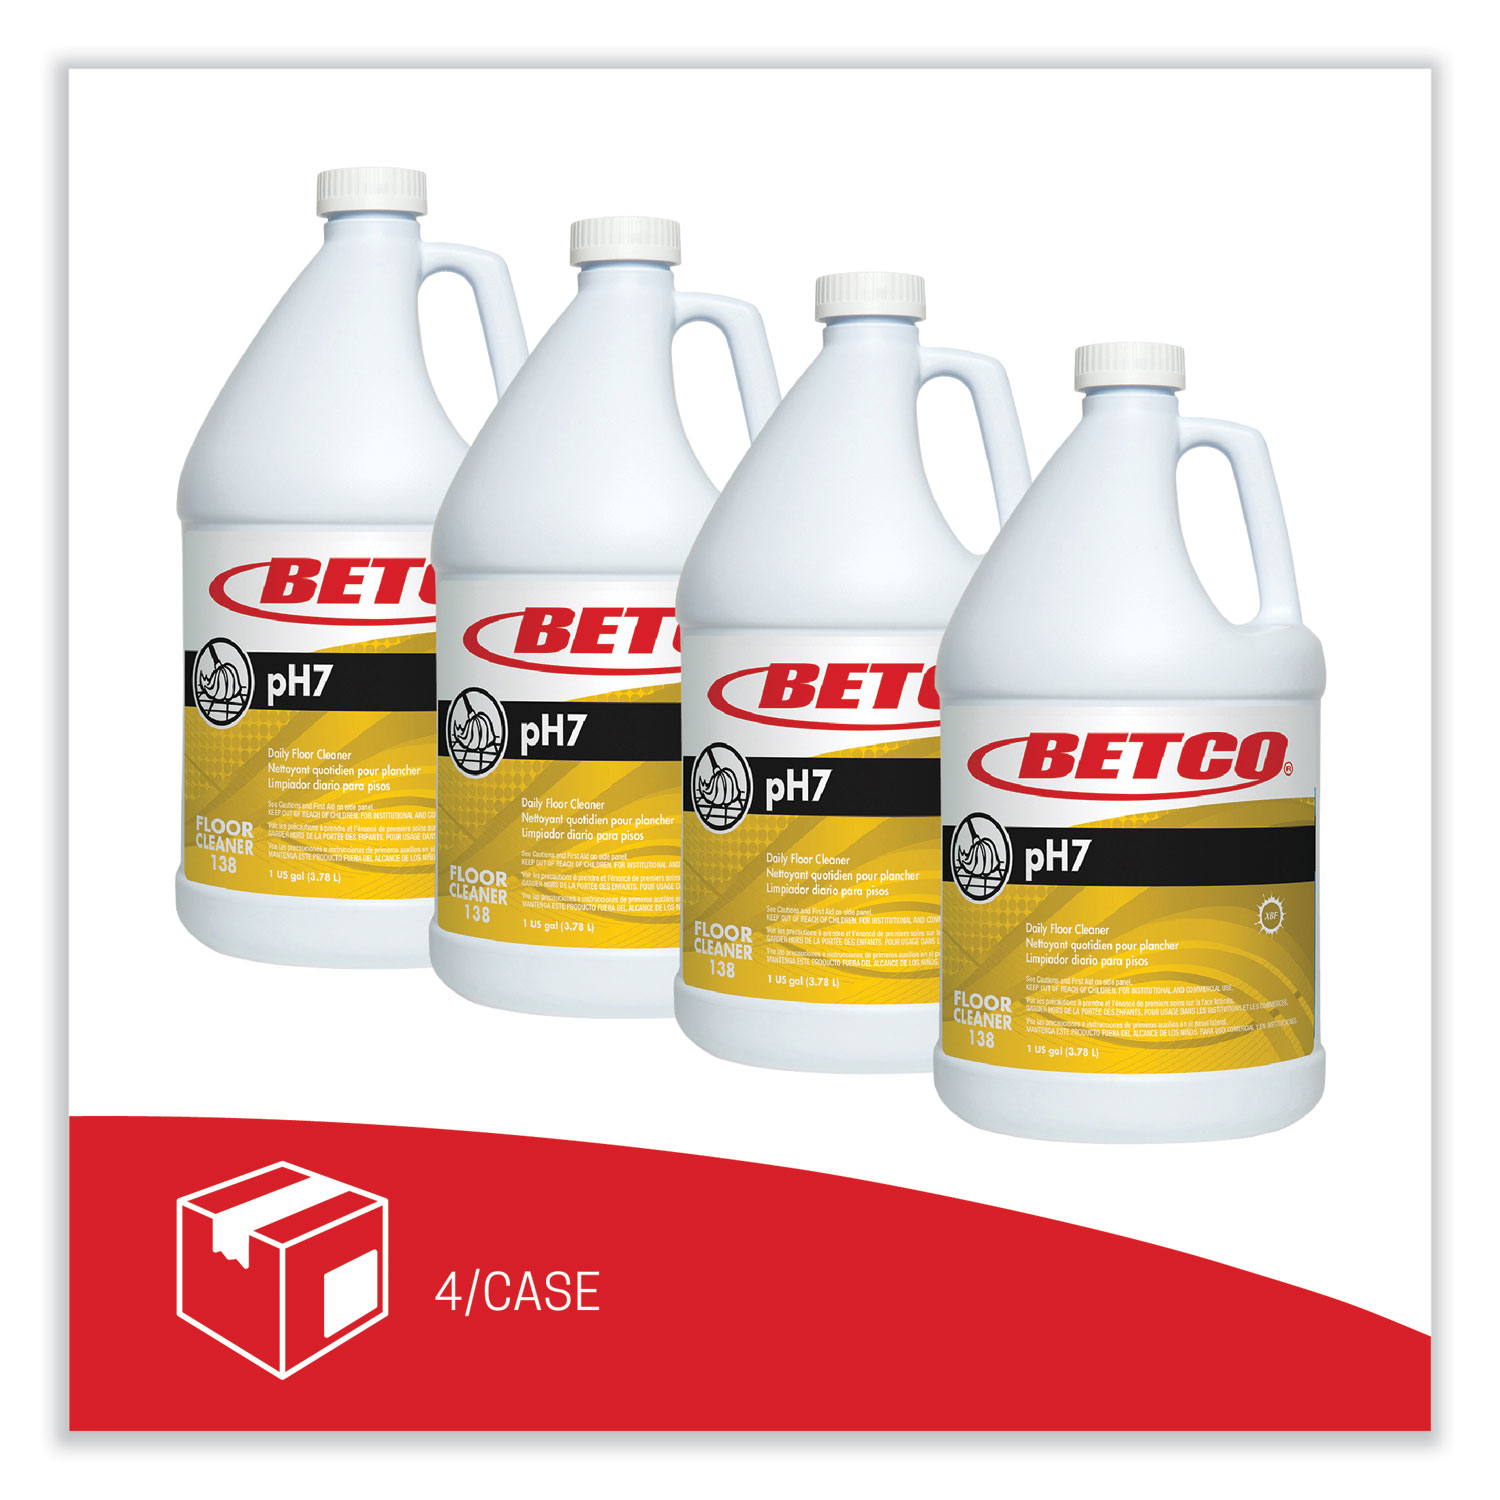 Betco pH7 Commercial Grade Floor Cleaner, Lemon (Concentrated), 1 gal Bottle - 4/Case